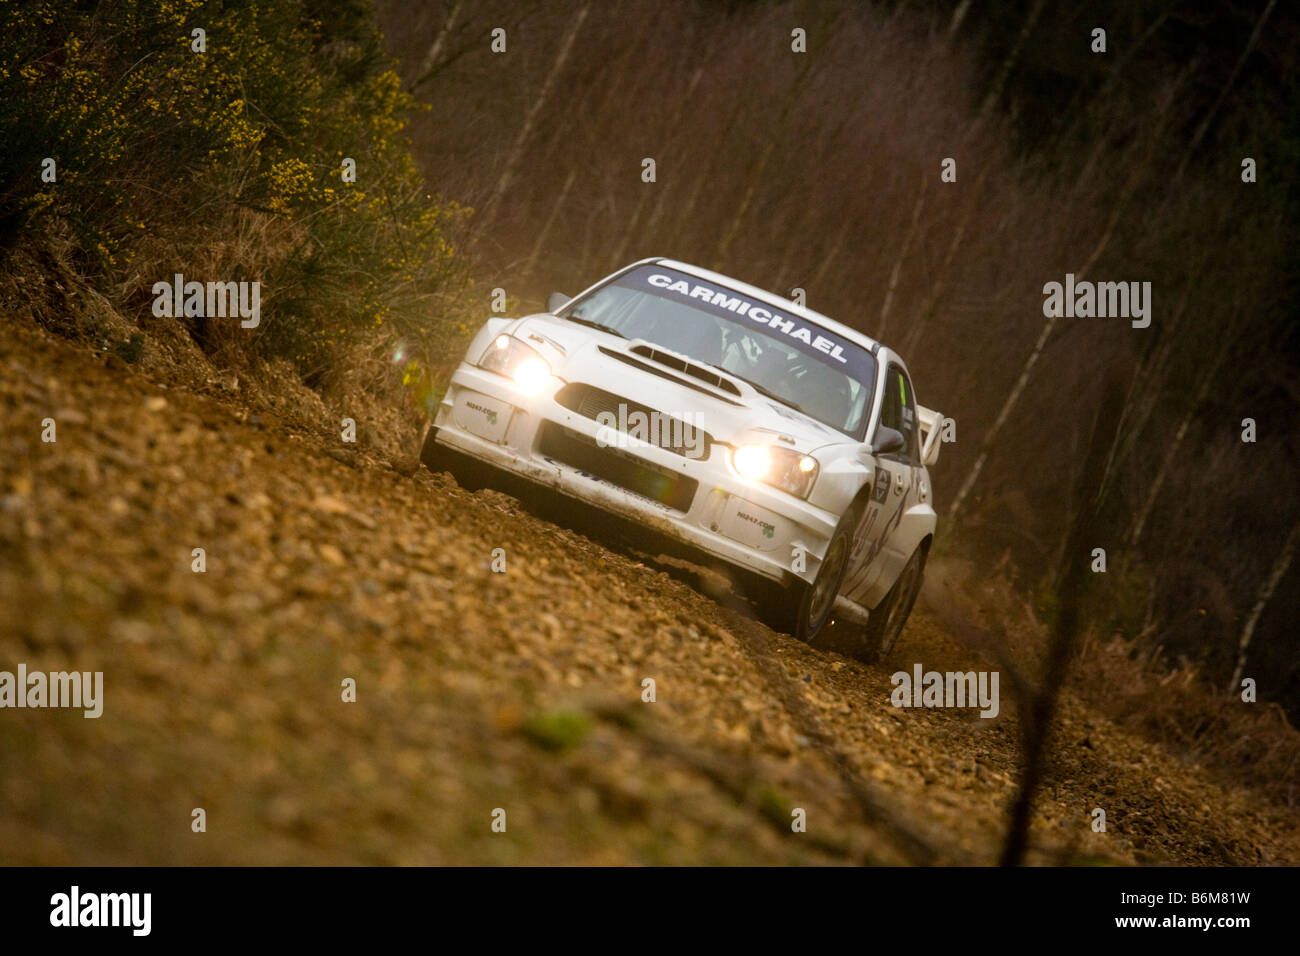 Alan Carmichael e Ivor Lamont nel loro Subaru Impreza WRC competere nel 2008 Rallye Sunseeker Foto Stock